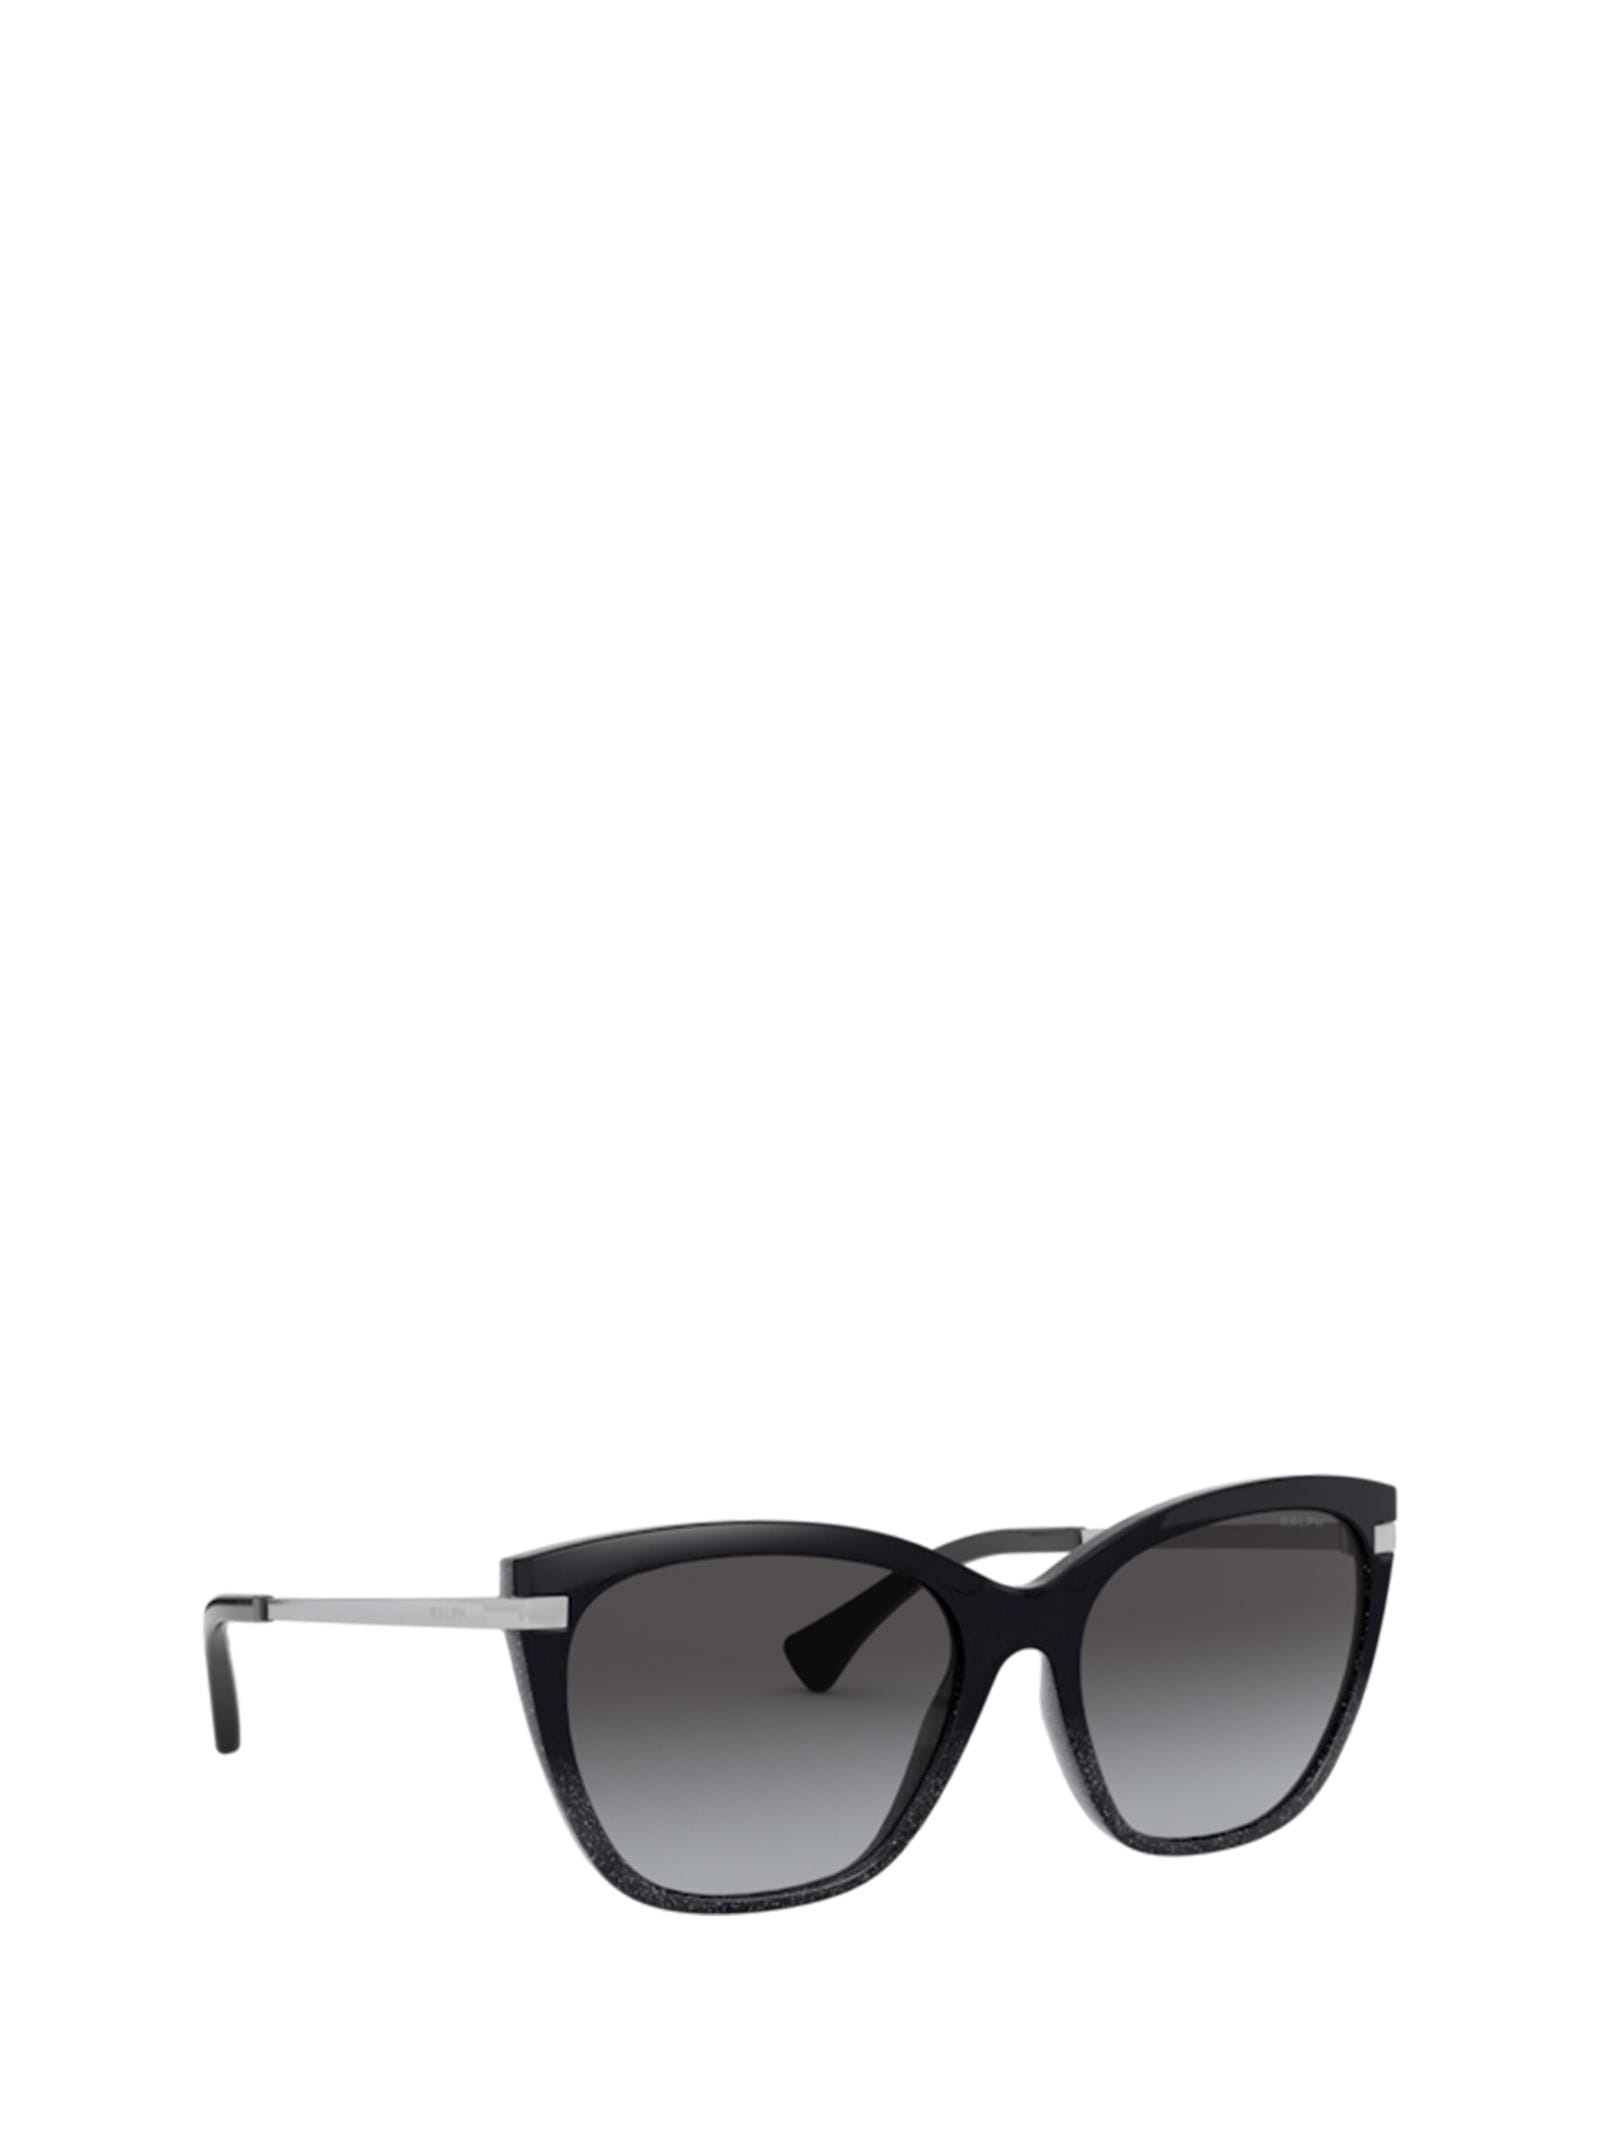 Shop Polo Ralph Lauren Ra5267 Black Glitter Sunglasses